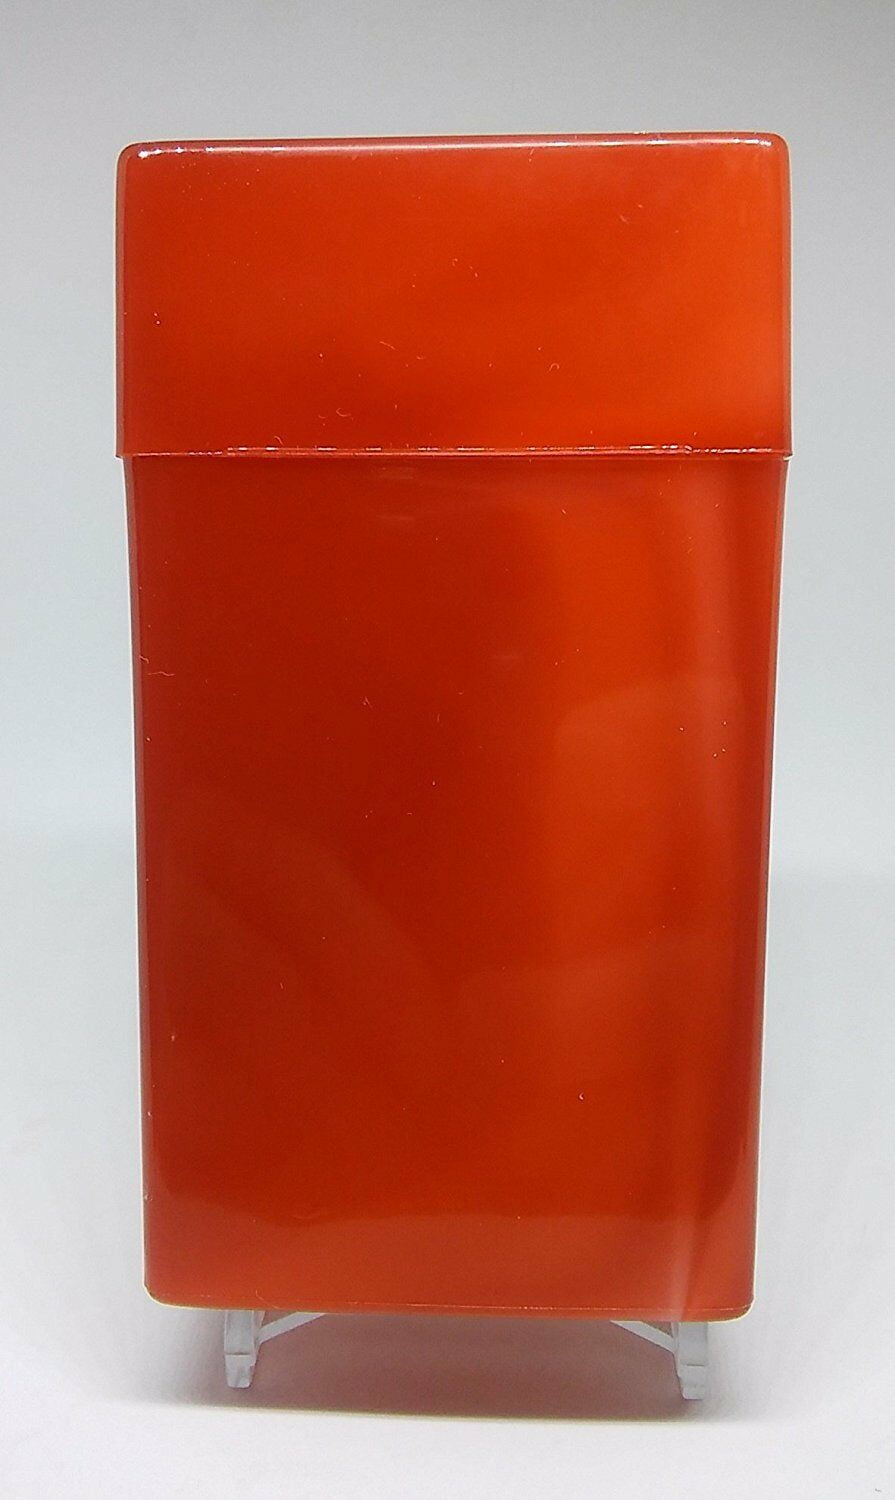 Orange for 19-20 Cigarette Box Cigarette Case 100 Long Size 100 mm